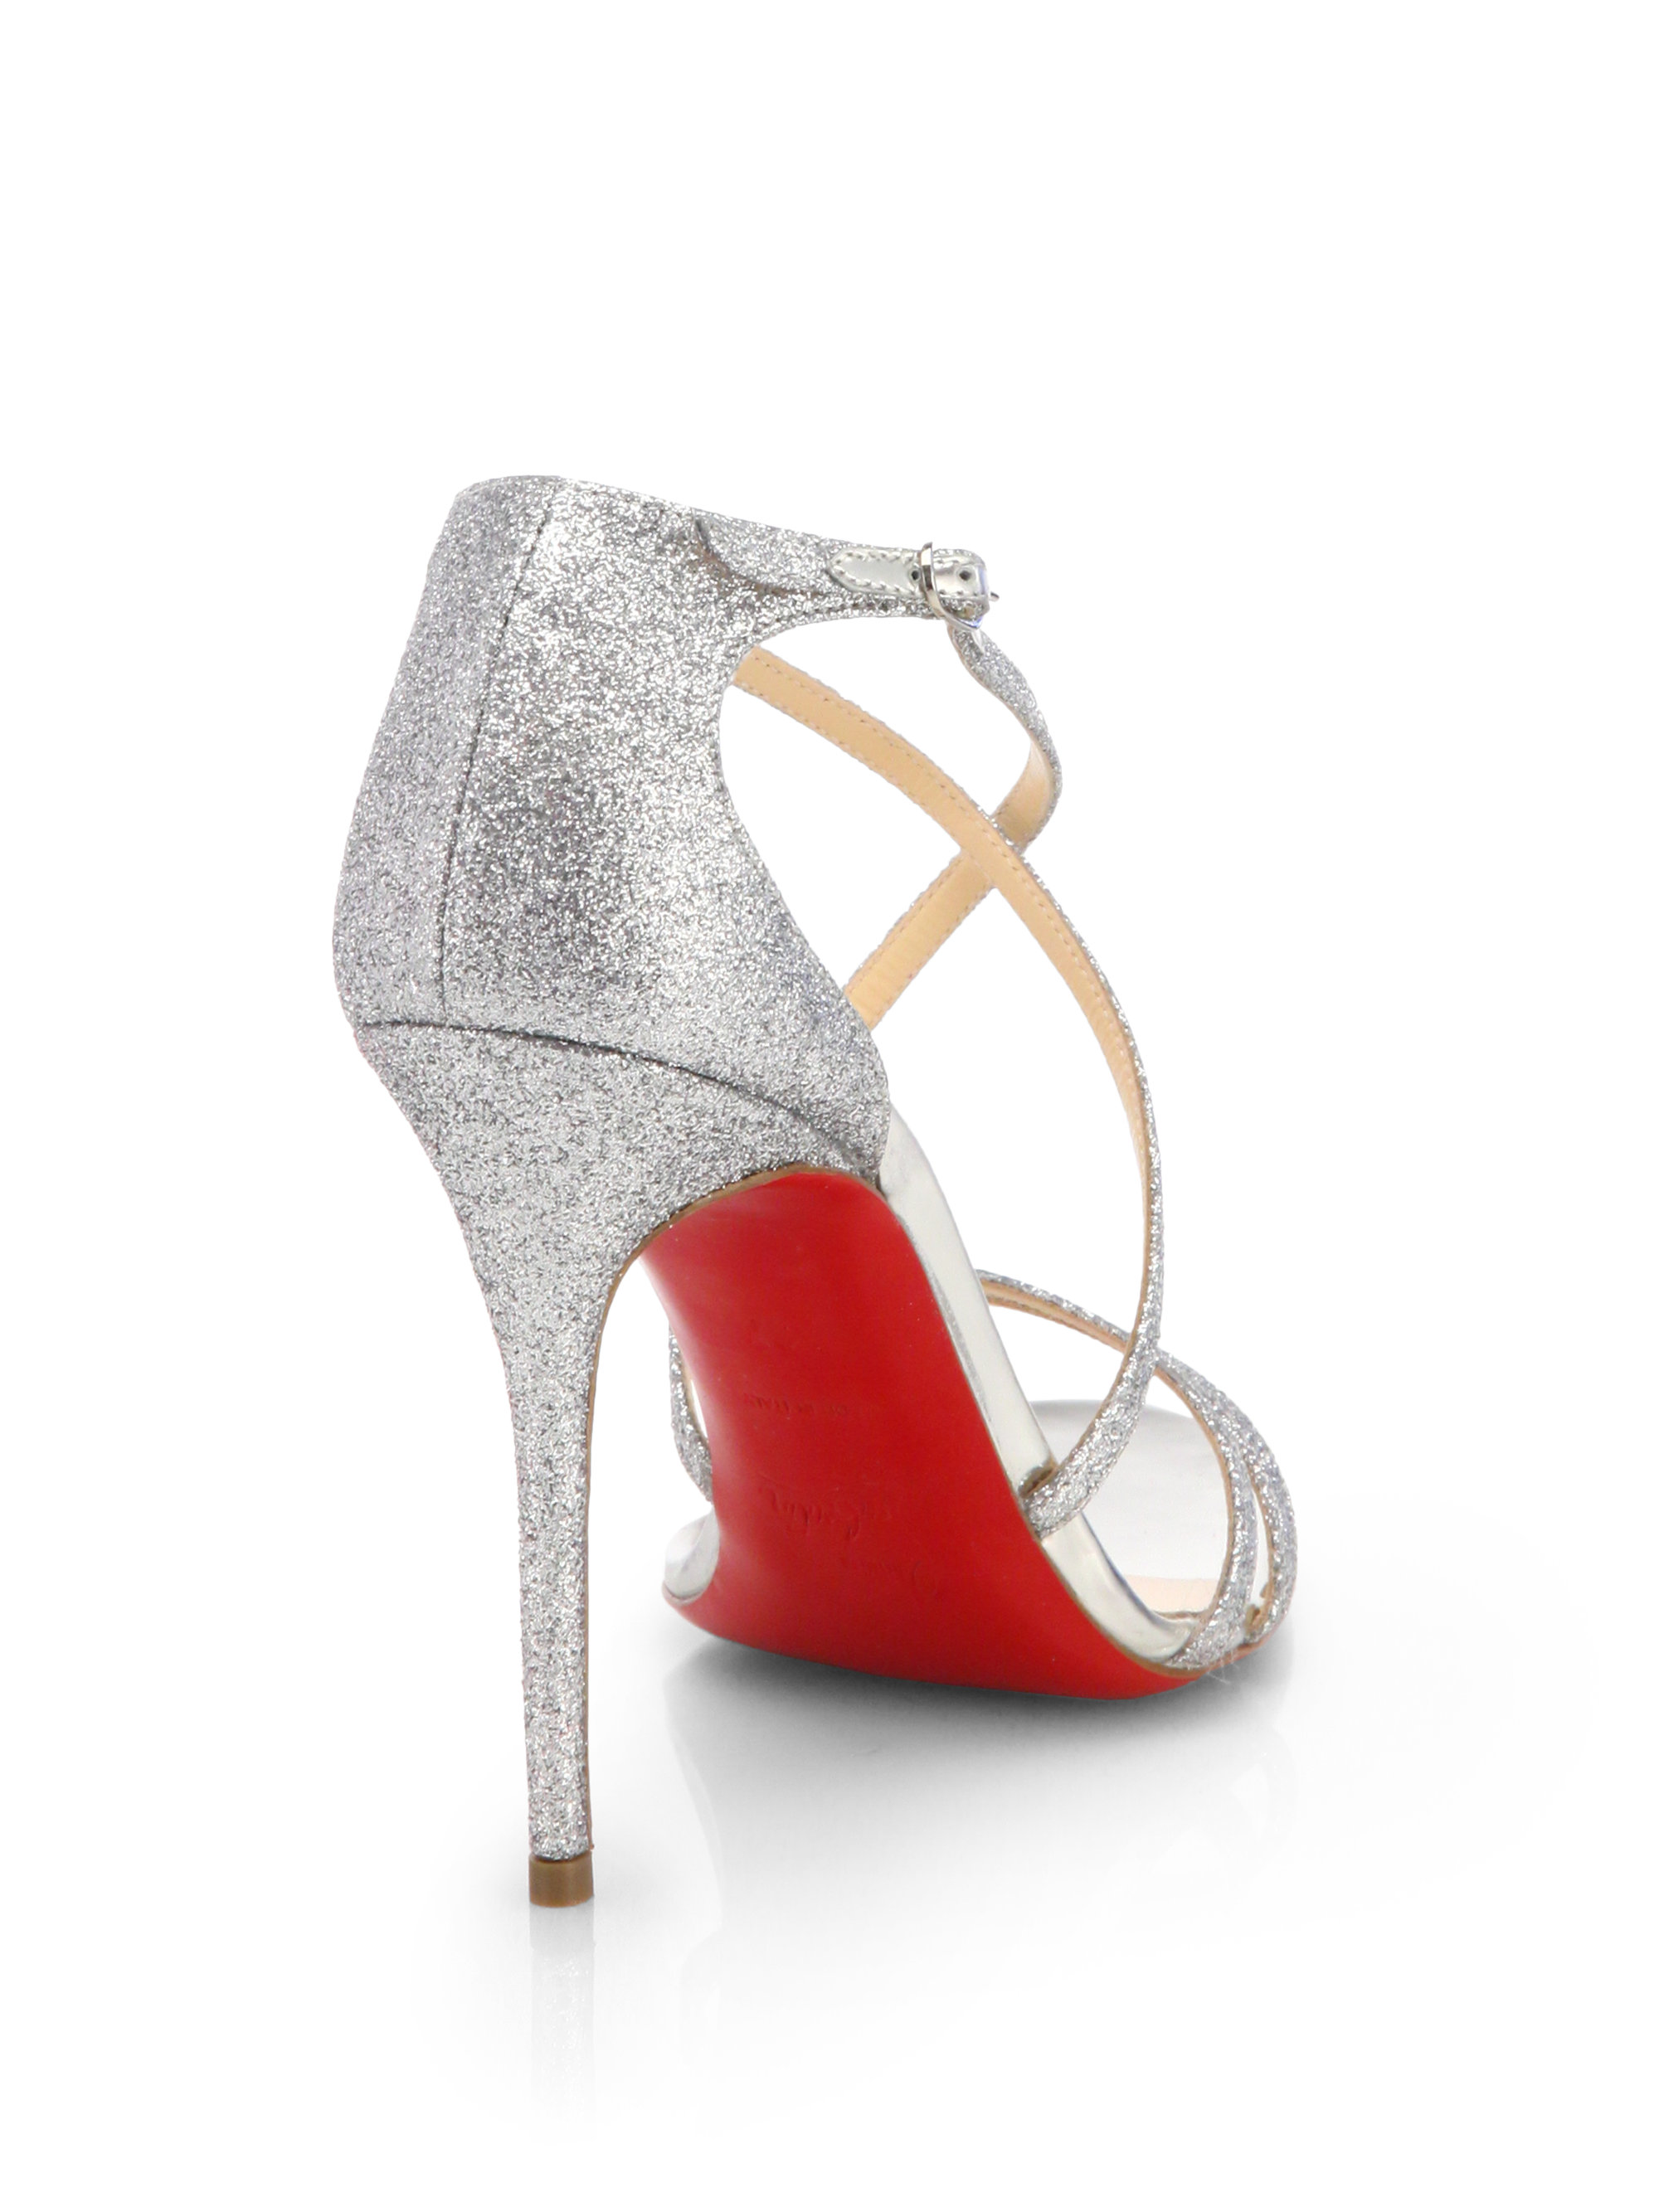 Christian Louboutin Gwynitta Glitter Sandals in Metallic | Lyst